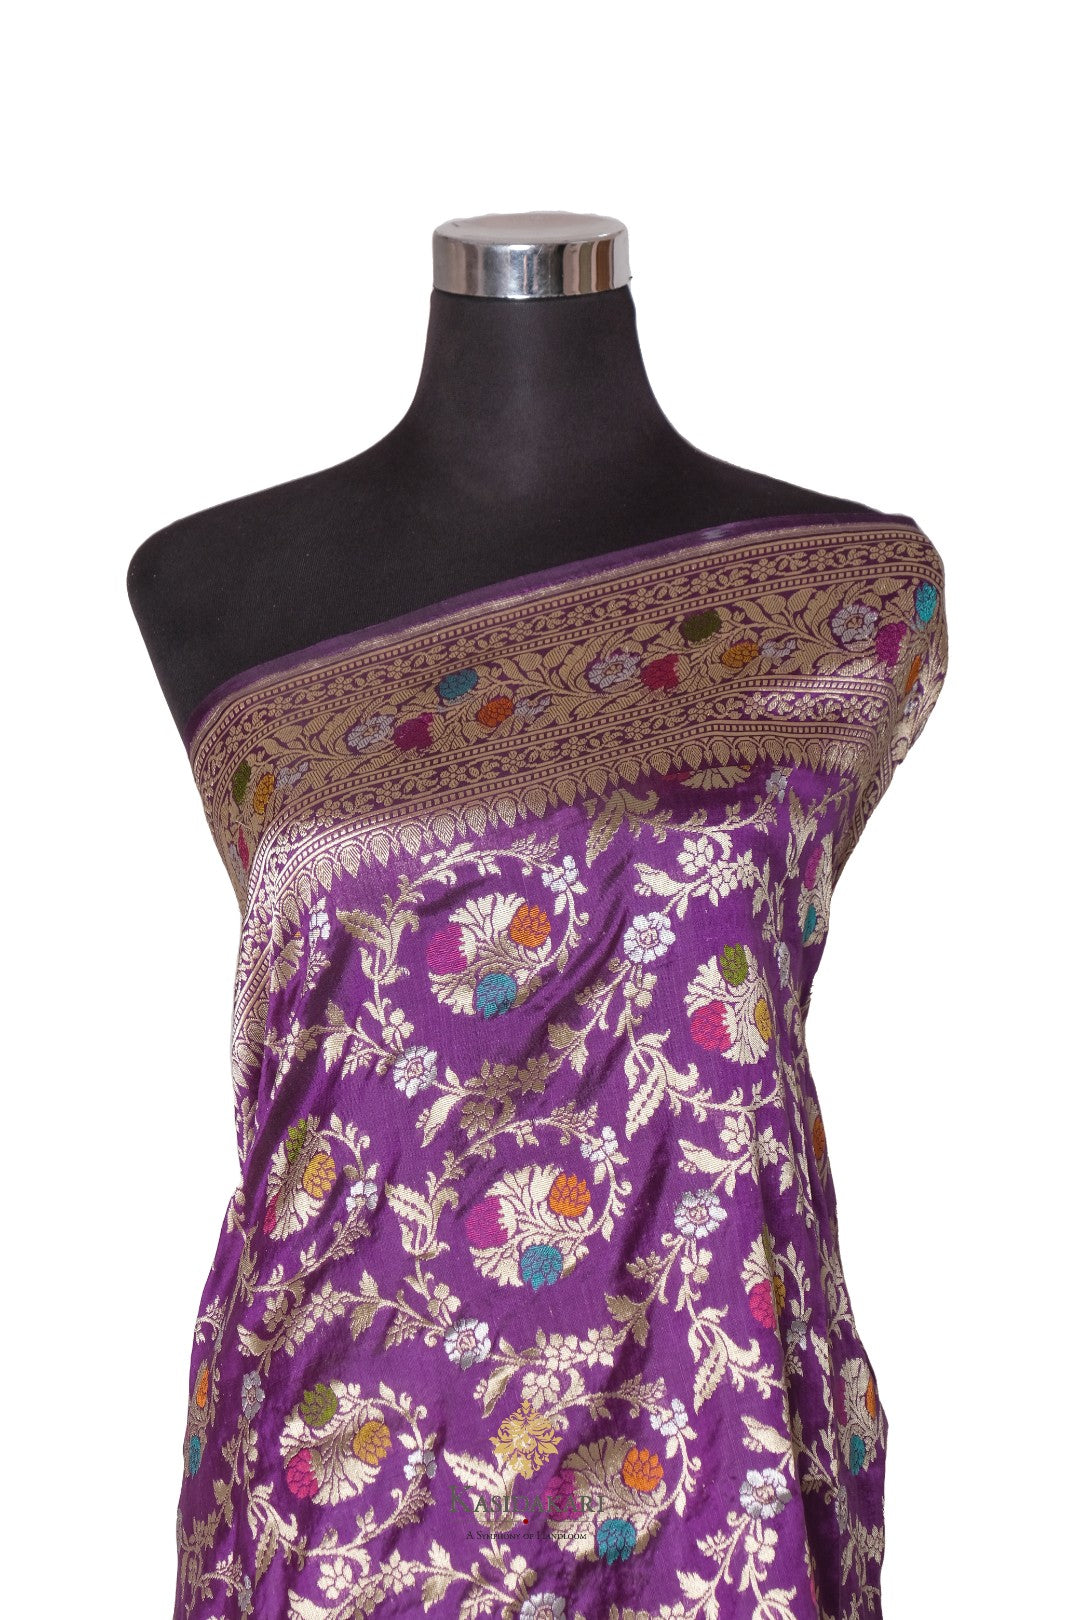 Purple Banarasi Katan Silk Handloom Saree